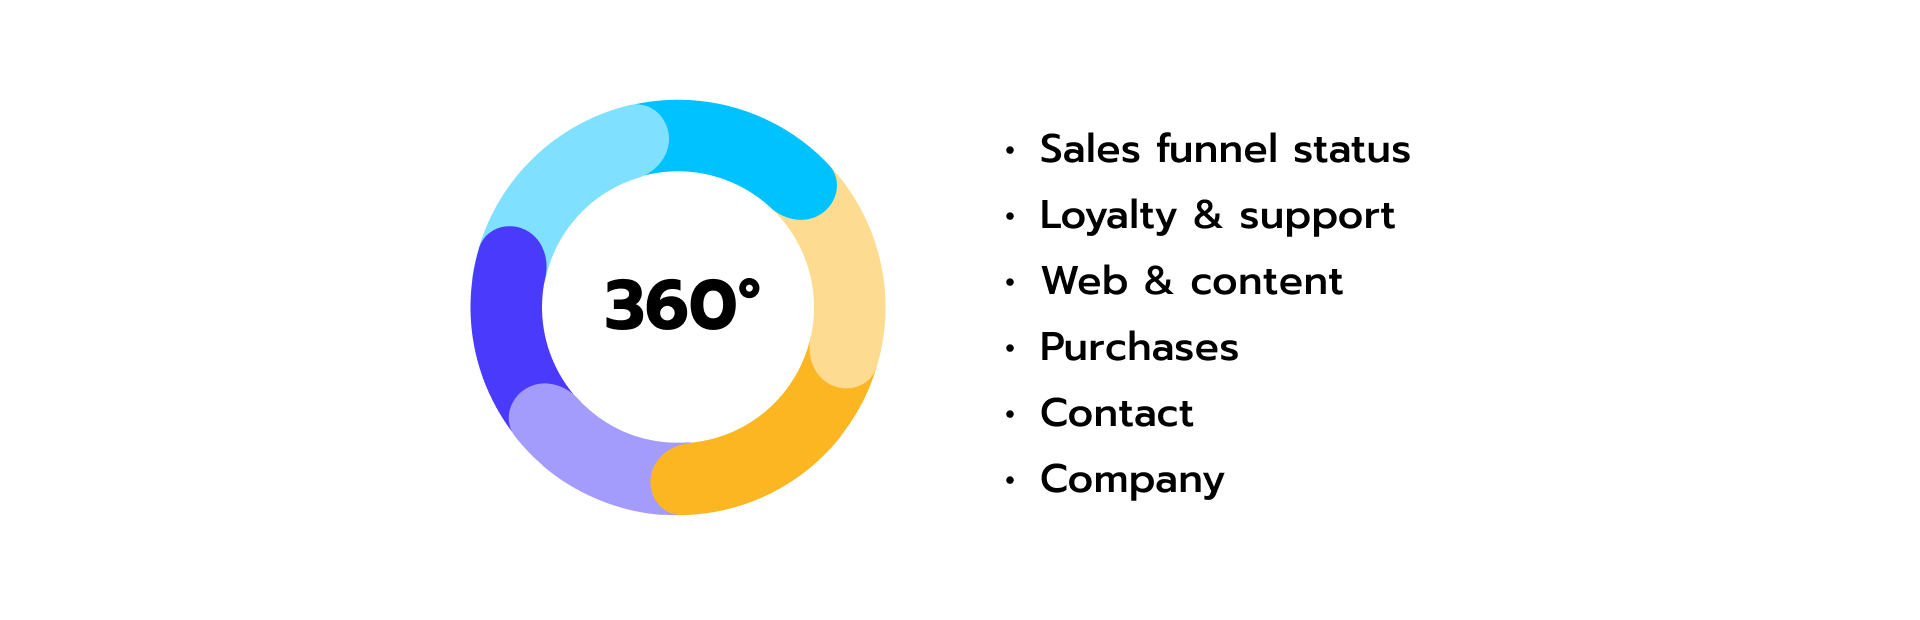 360-degree customer view